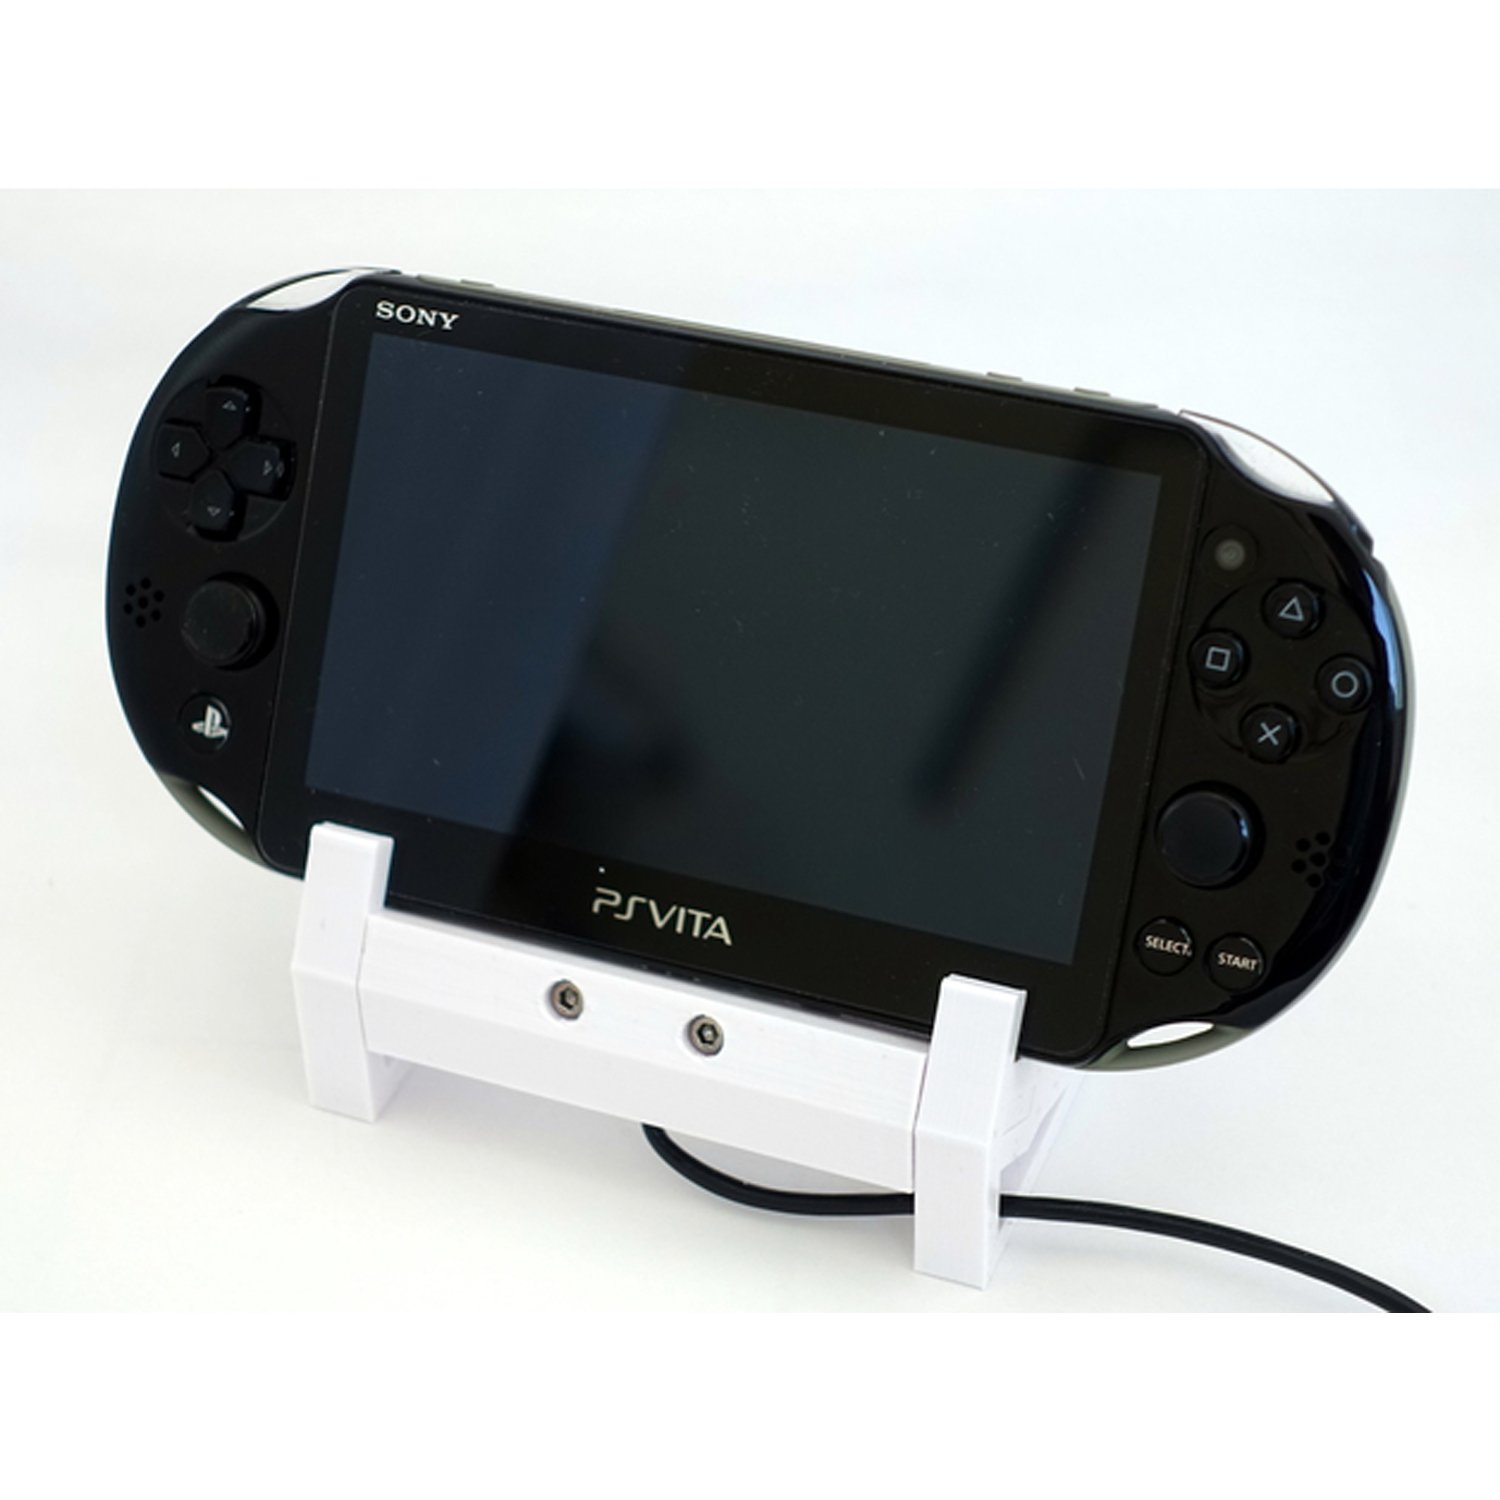 Sony PlayStation Vita PCH-2000 Charging Station PS Vita Dock Stand DIY Project